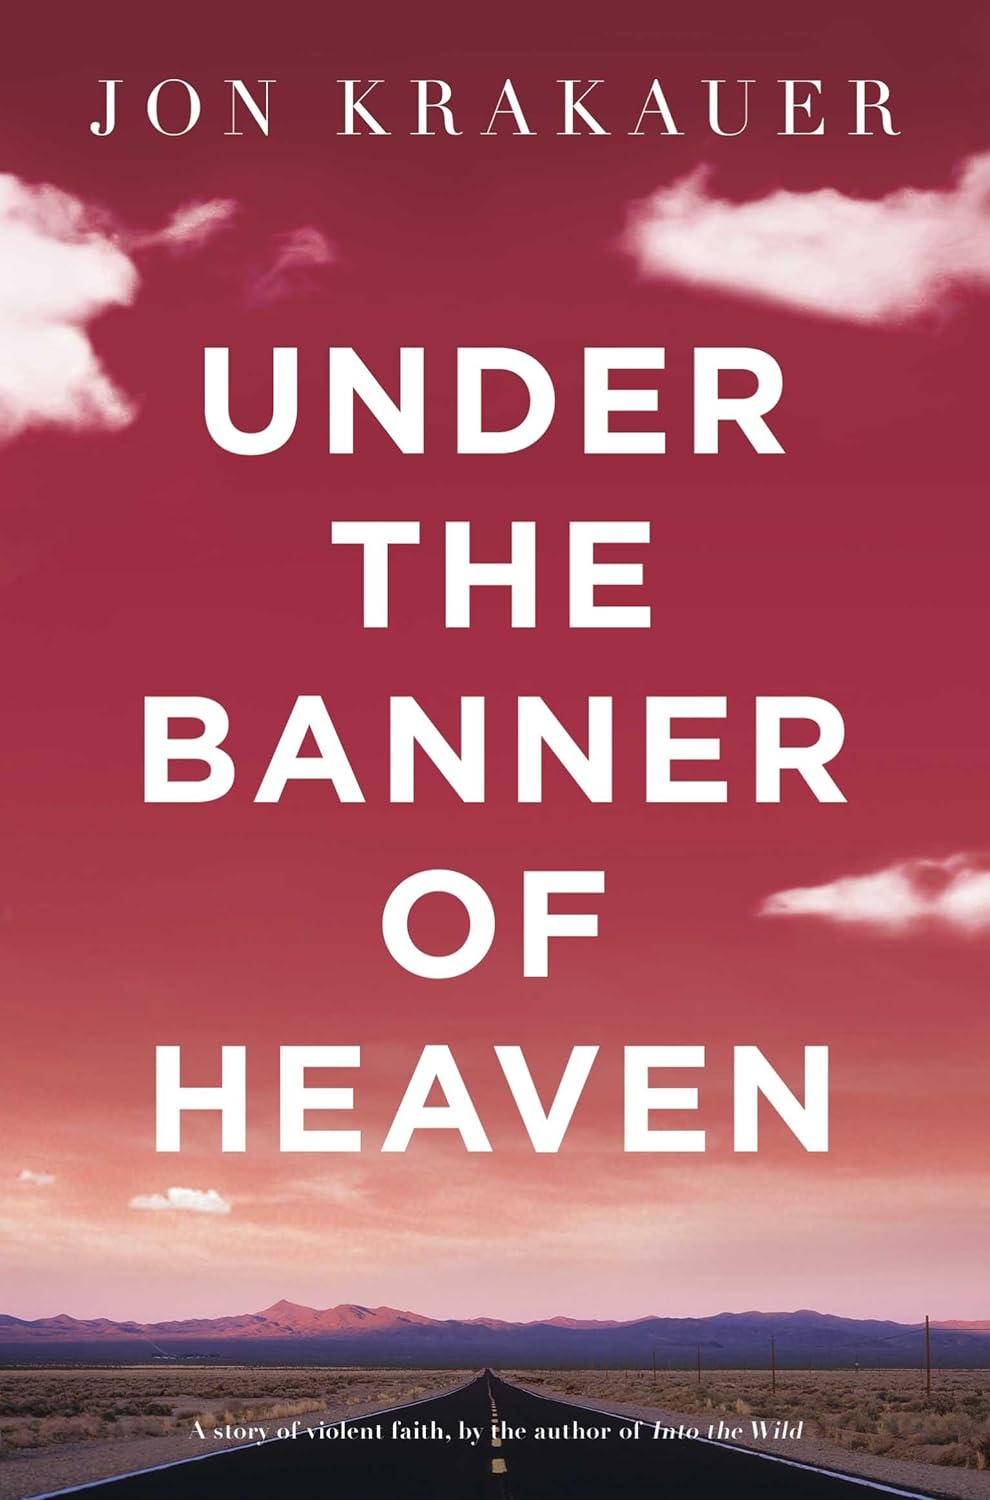 Jon Krakauer: Under the Banner of Heaven (AudiobookFormat)